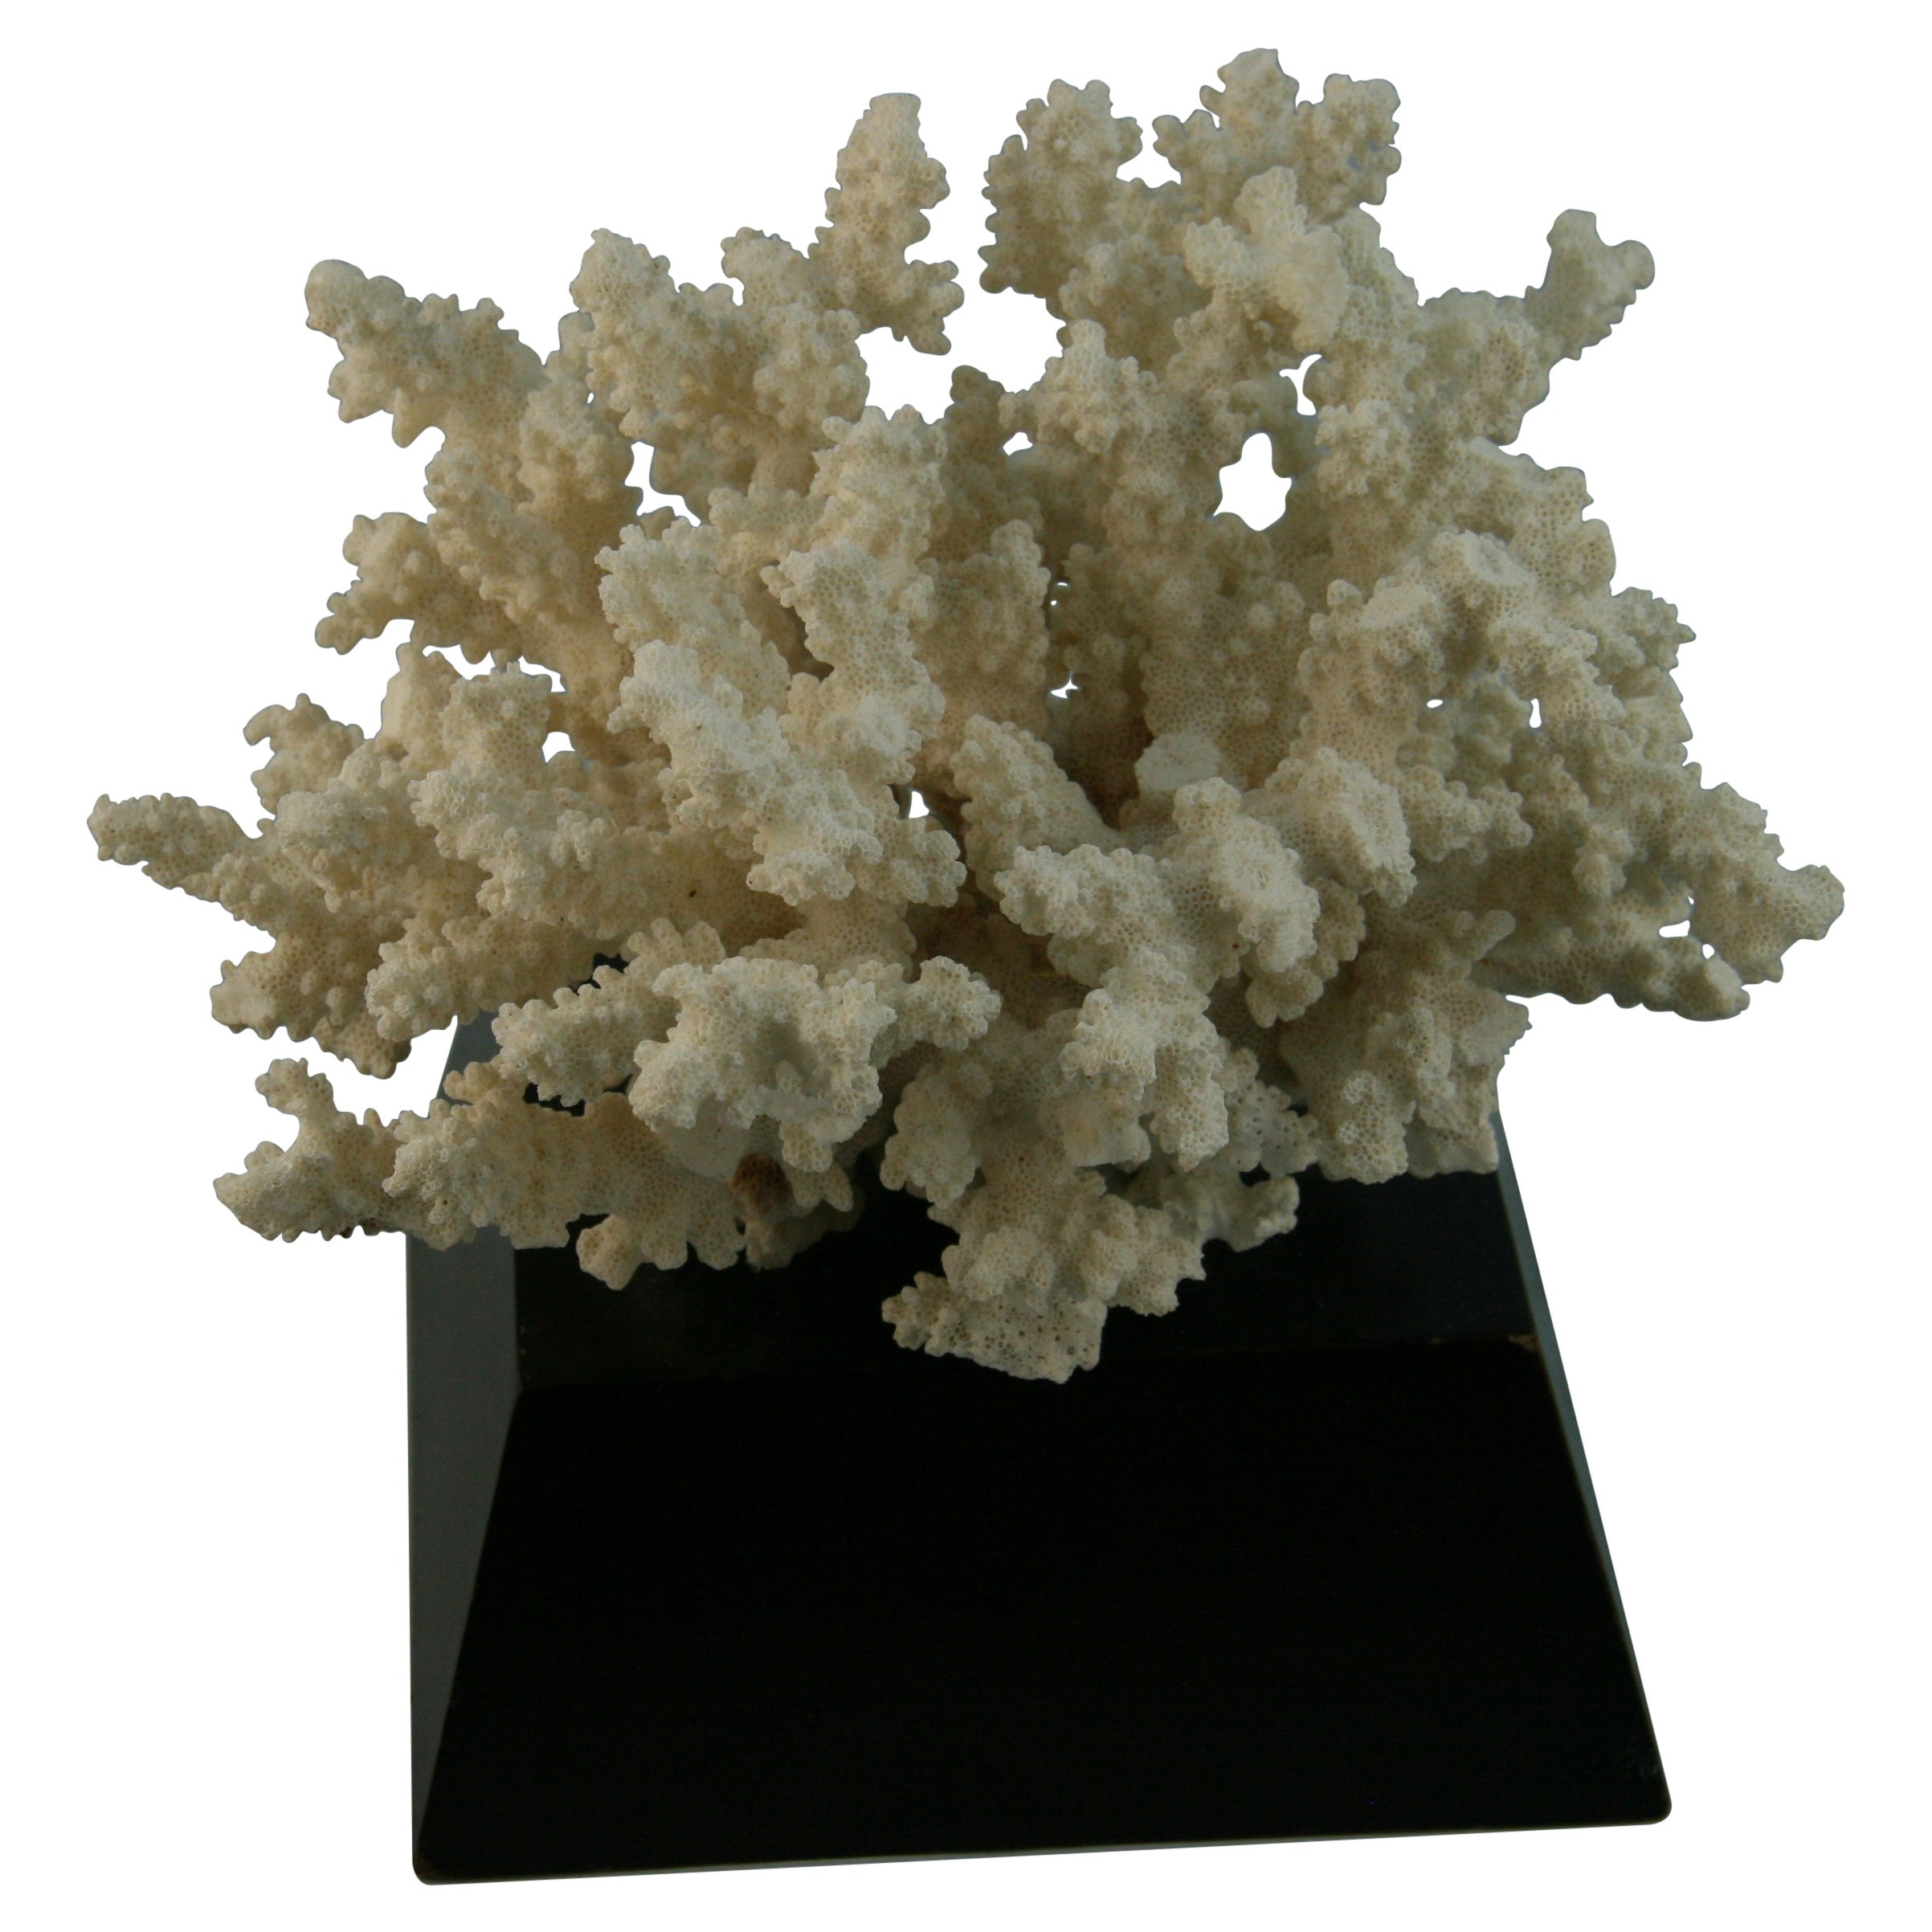 Coral natural sobre base de madera personalizada